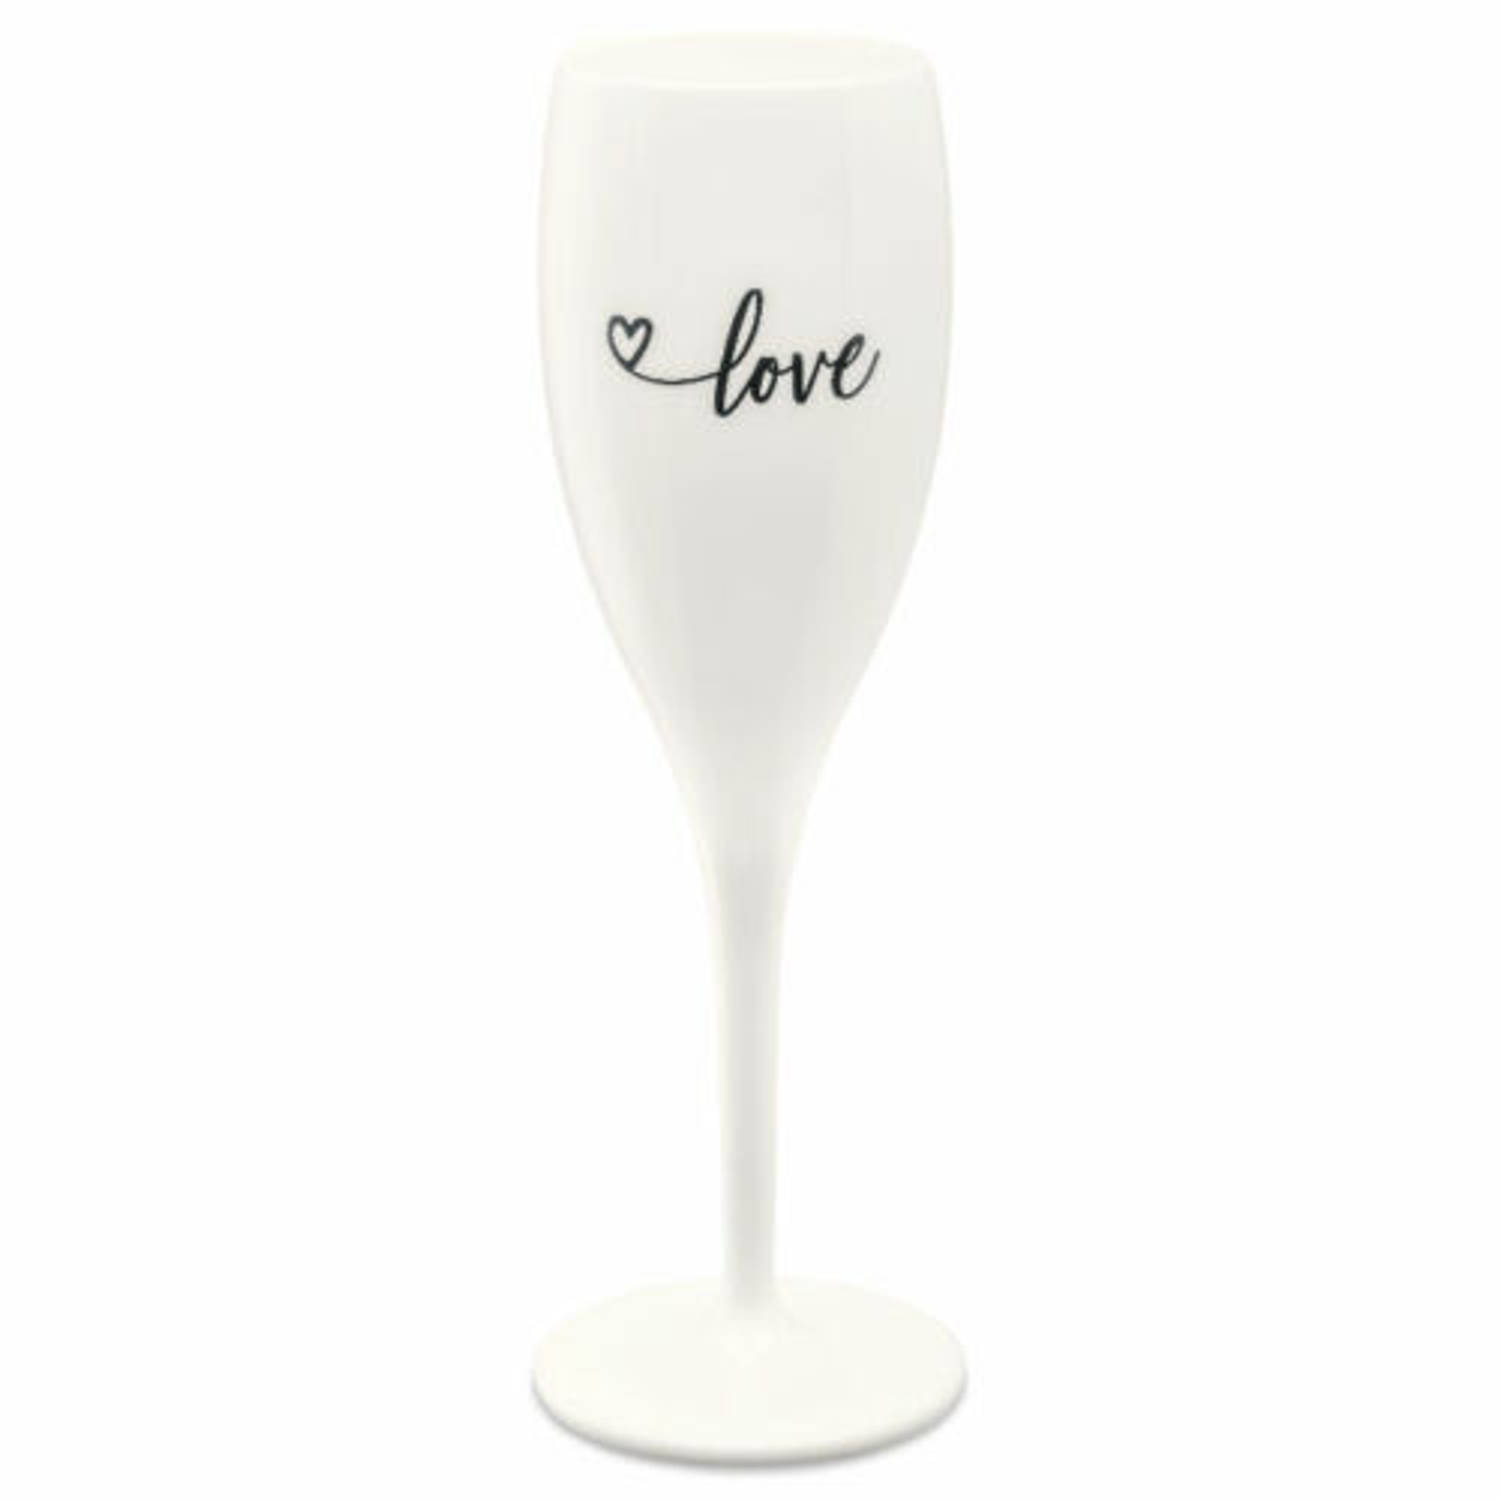 Champagneglas, 0.1 L, Set van 2, Organic, 'Love' - Koziol | Cheers No. 1